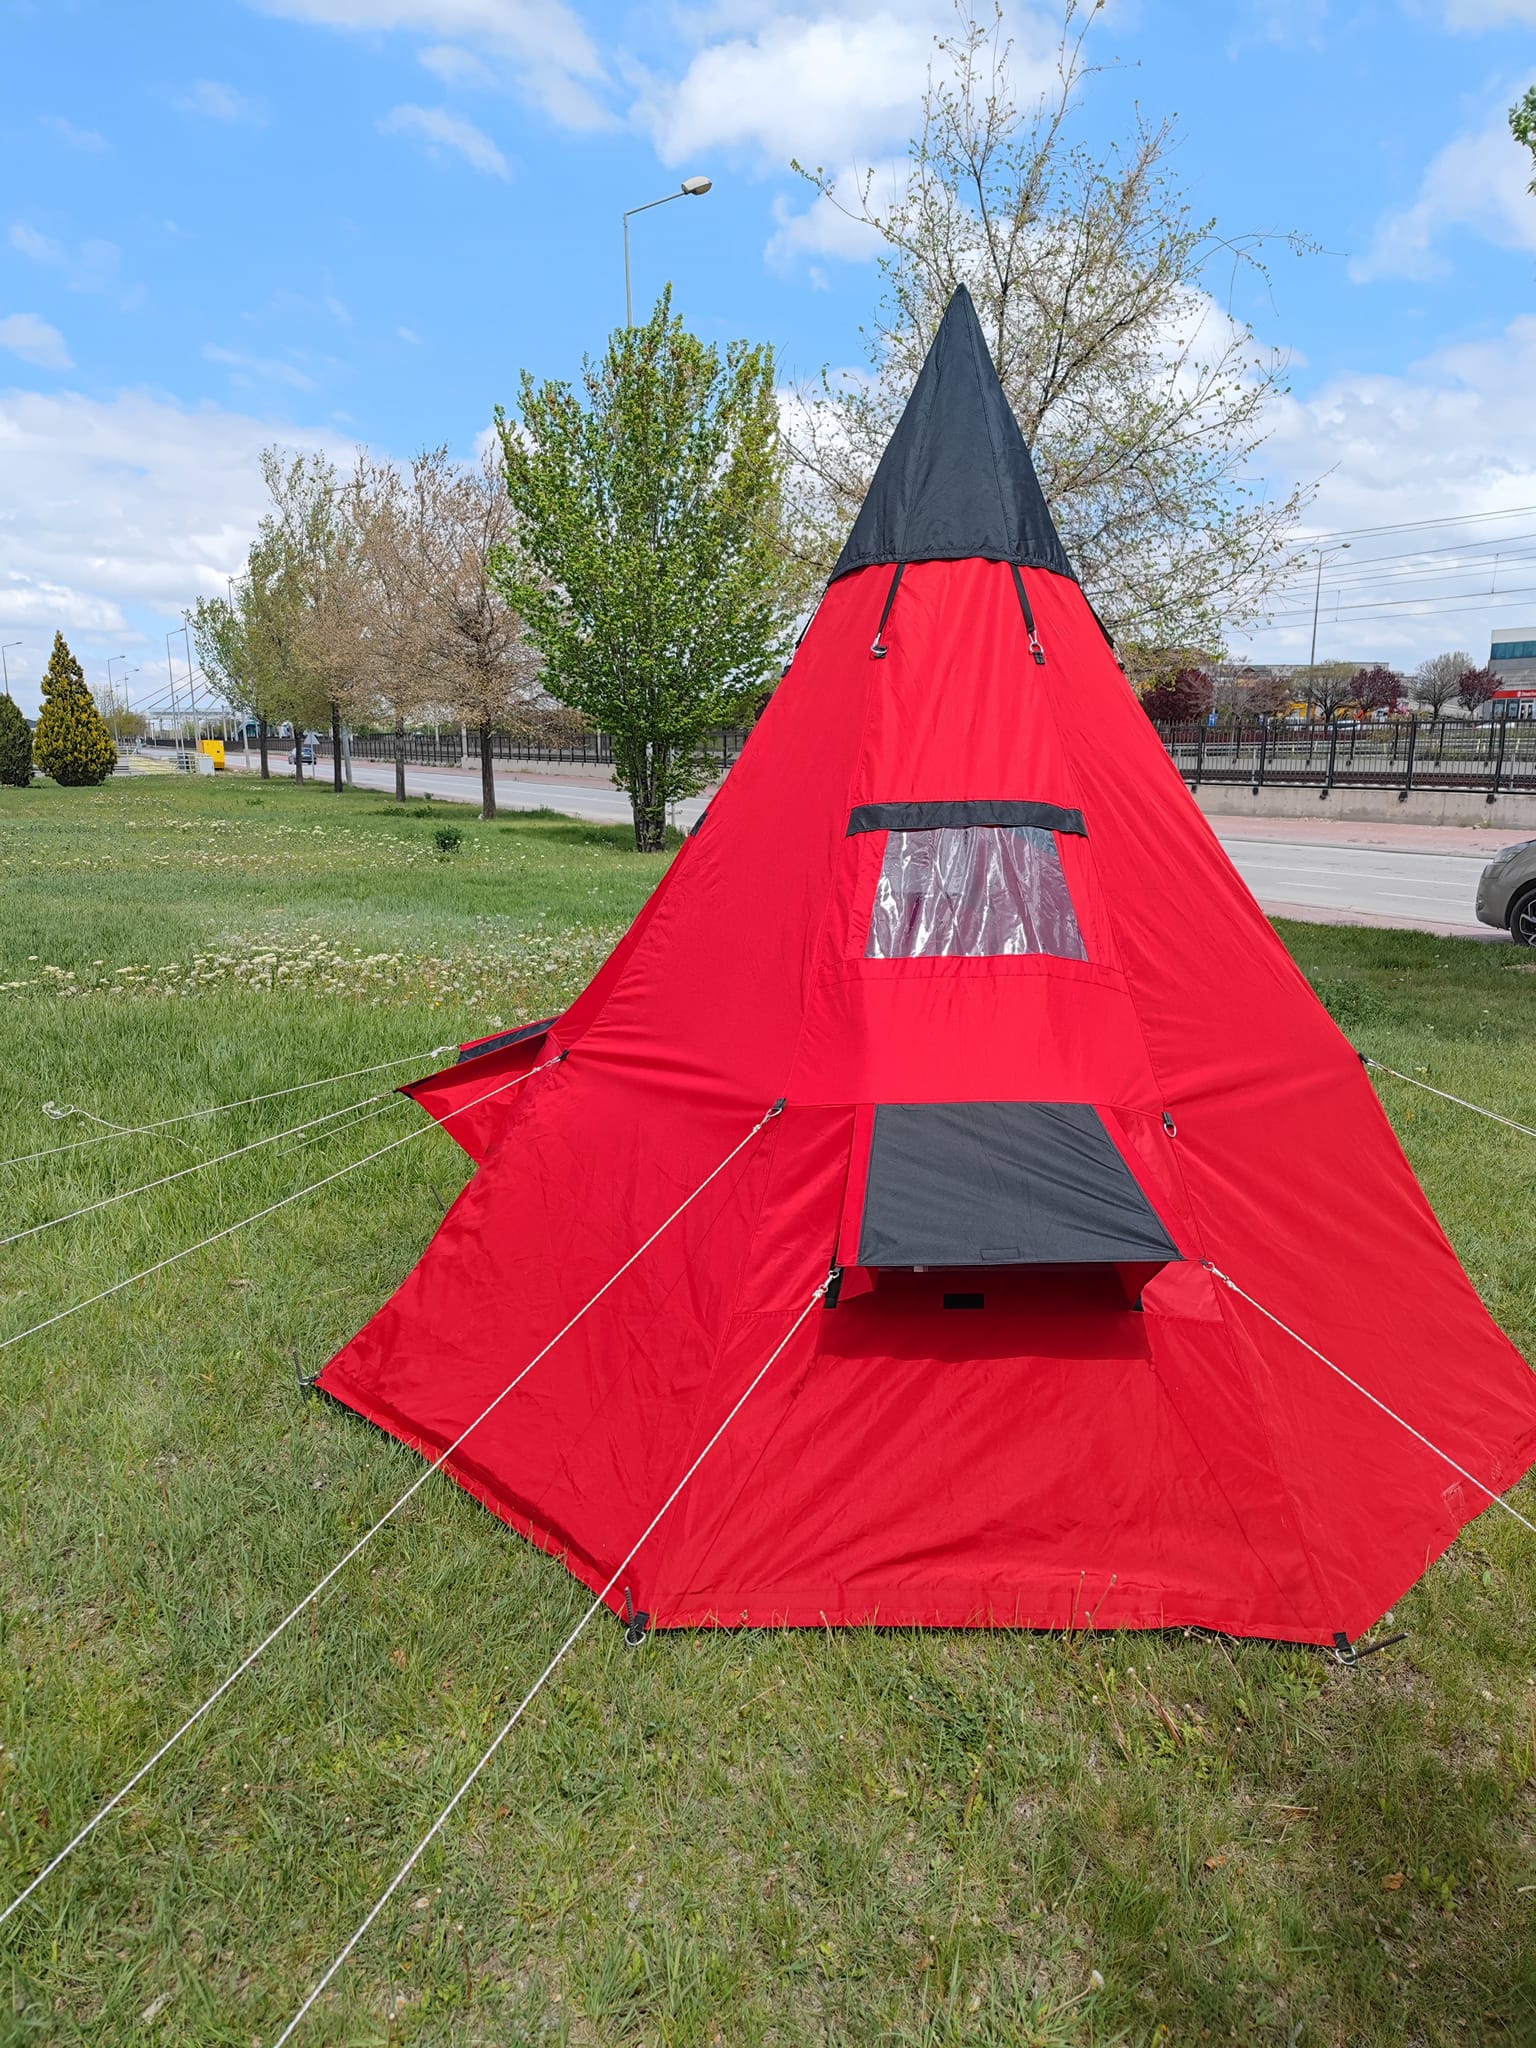 kamp çadırı